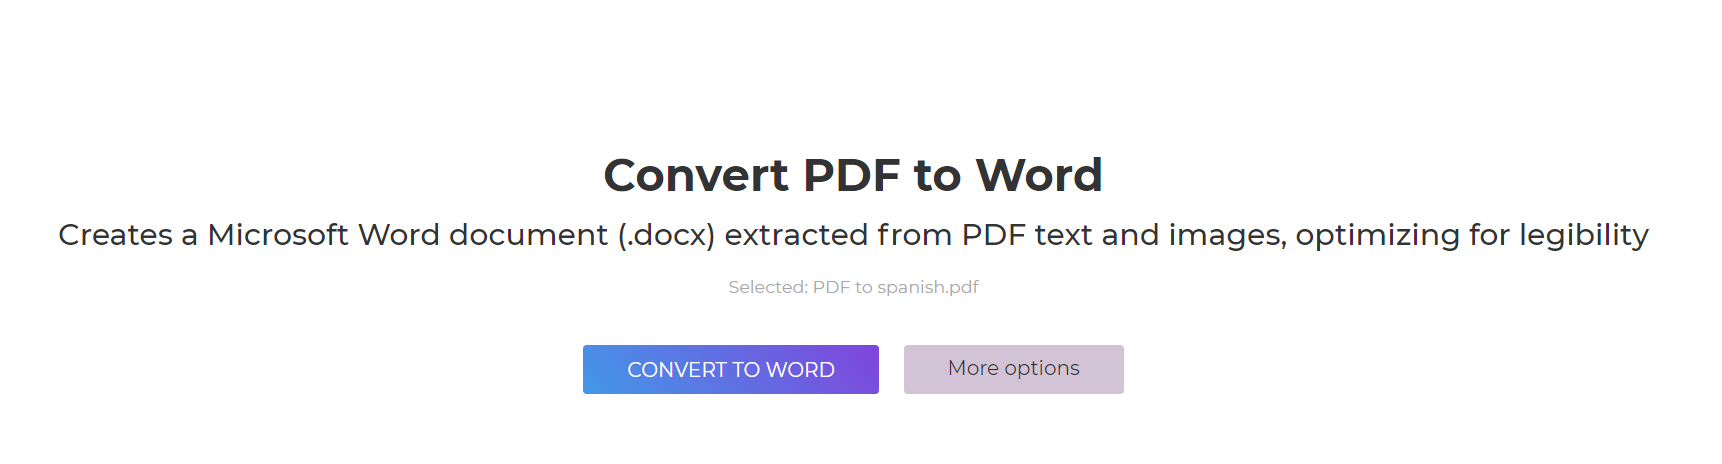 Convert PDF to word